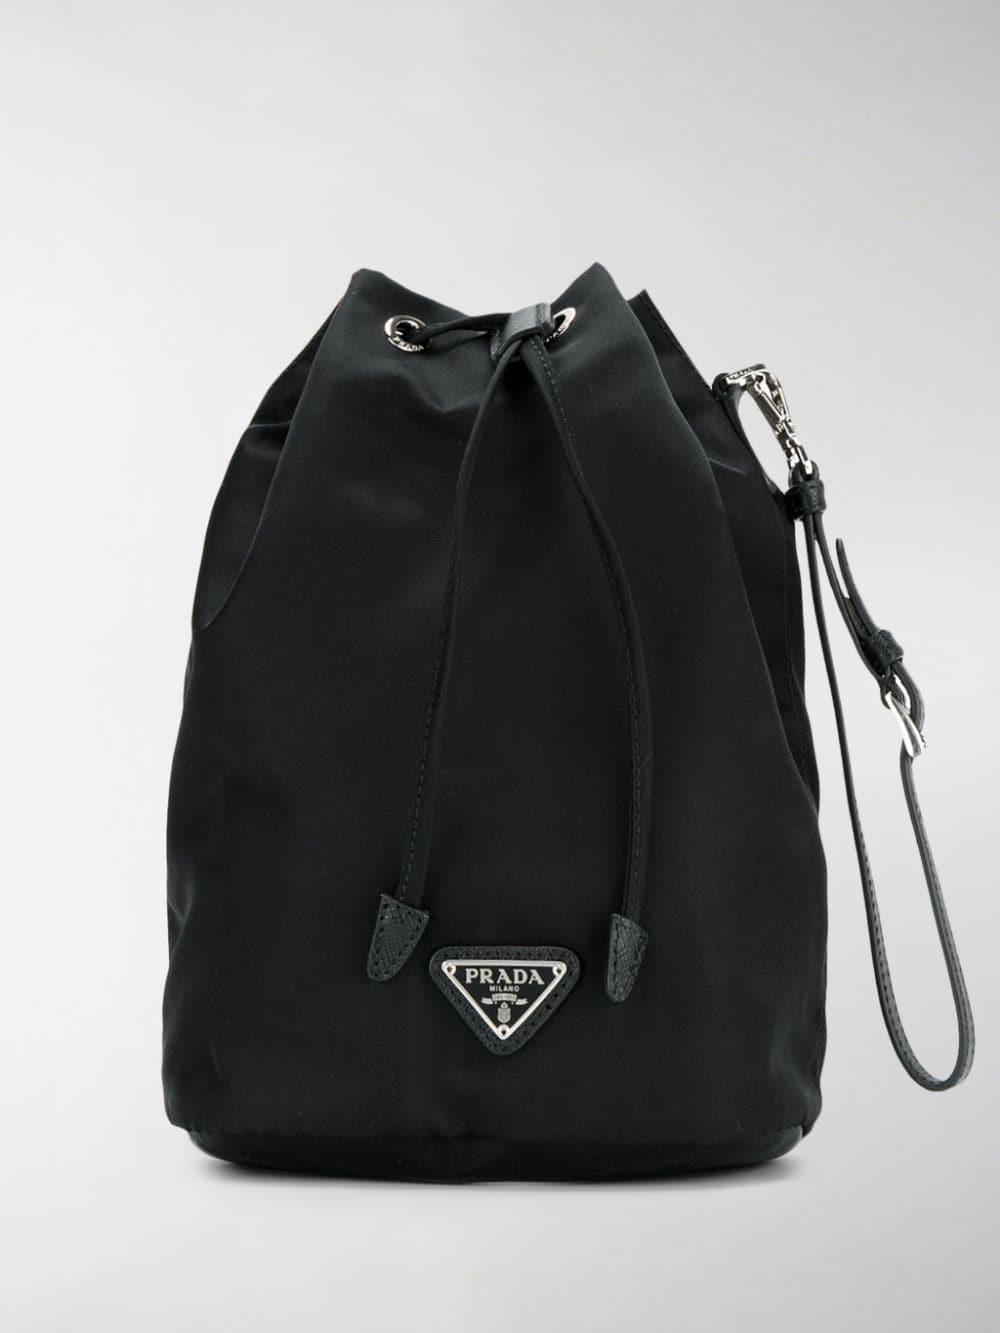 Prada Leather Black Nylon Pouch Bag - Lyst